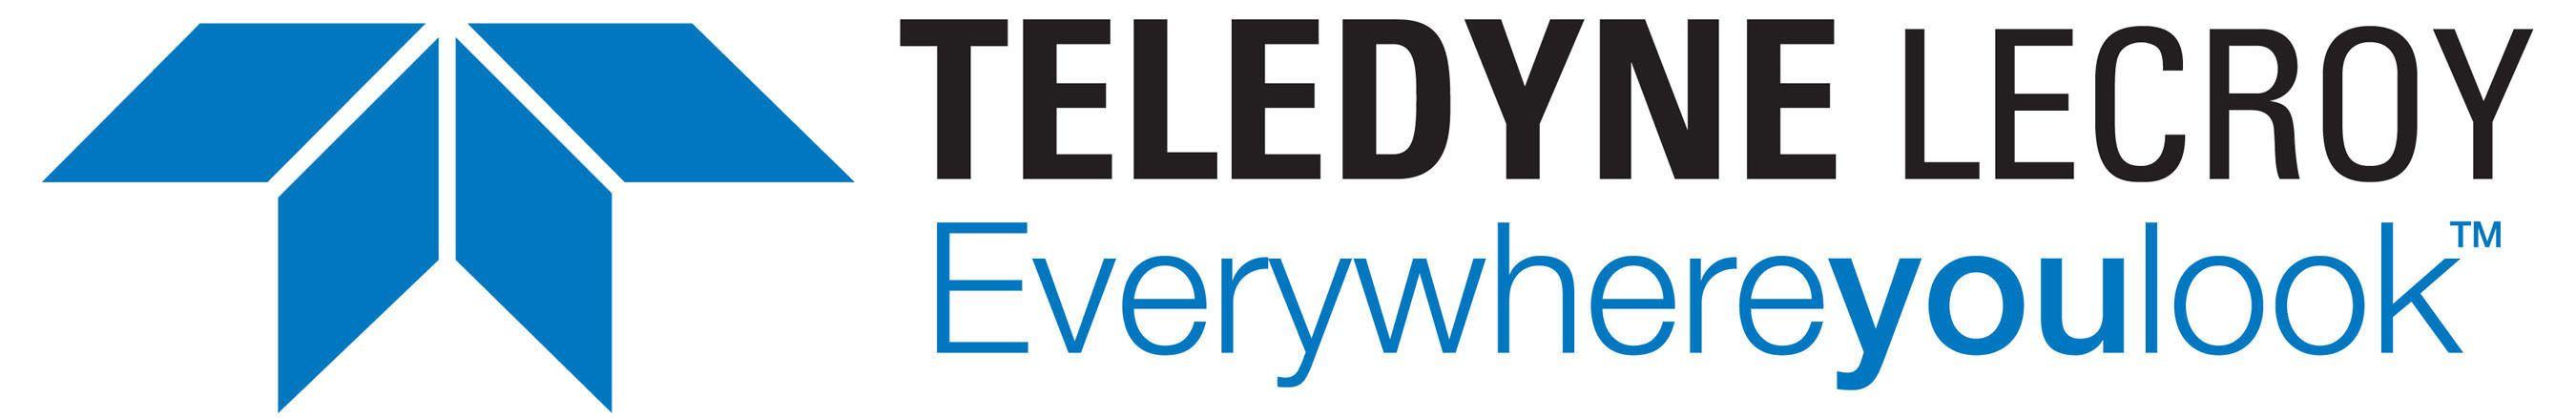 PCIe Logo - Teledyne LeCroy Announces New PCIe® External Cable 3.0 Interposer